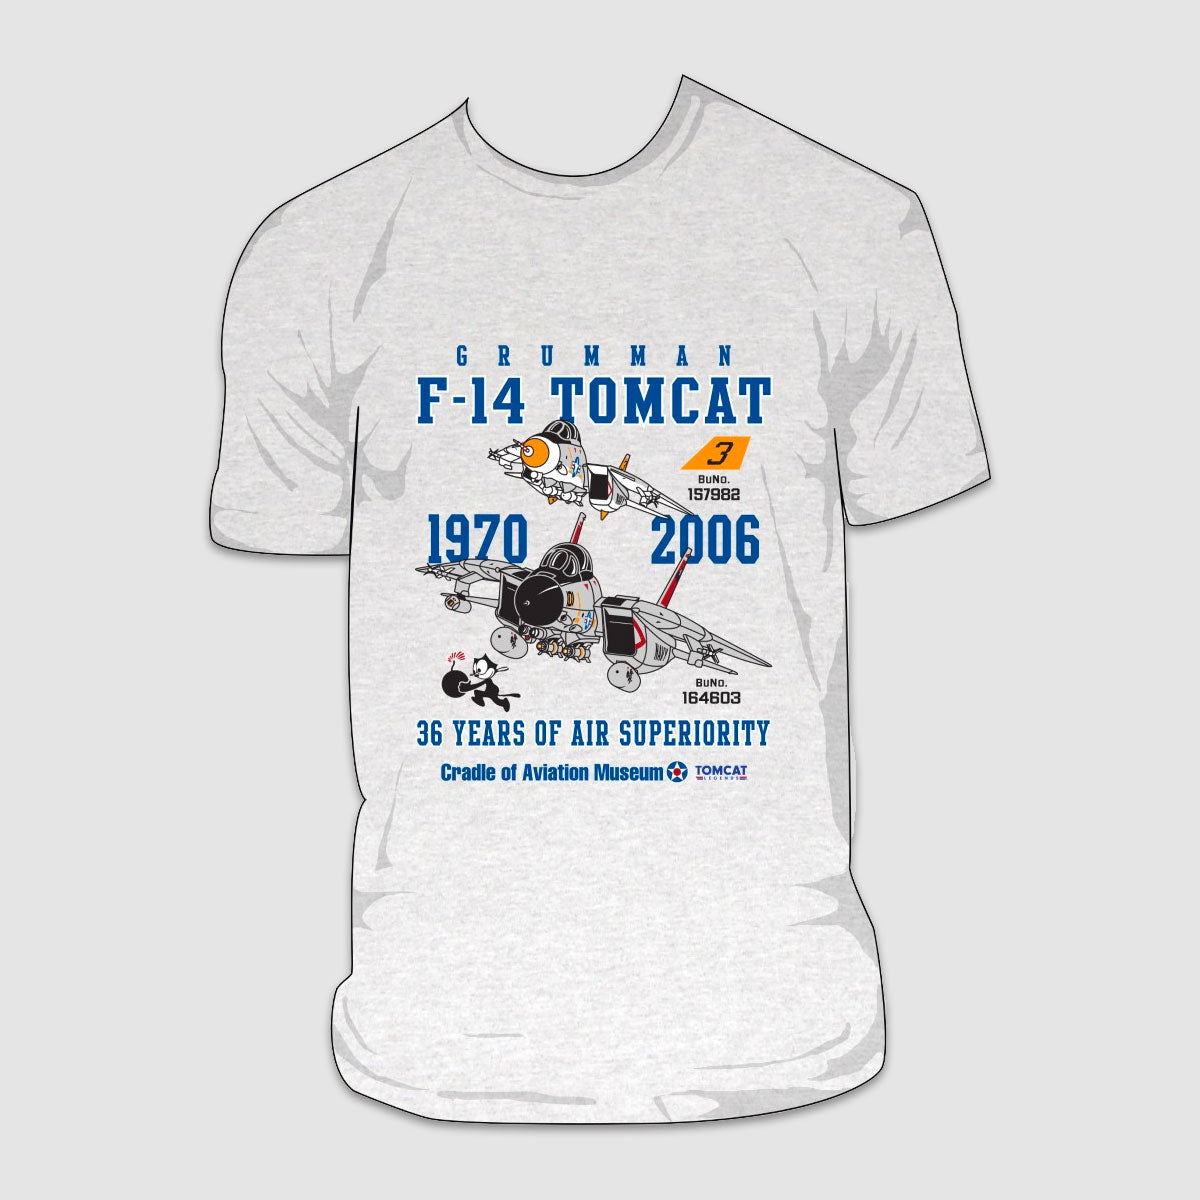 Cradle of Aviation Museum F-14 Tomcat History T-Shirt